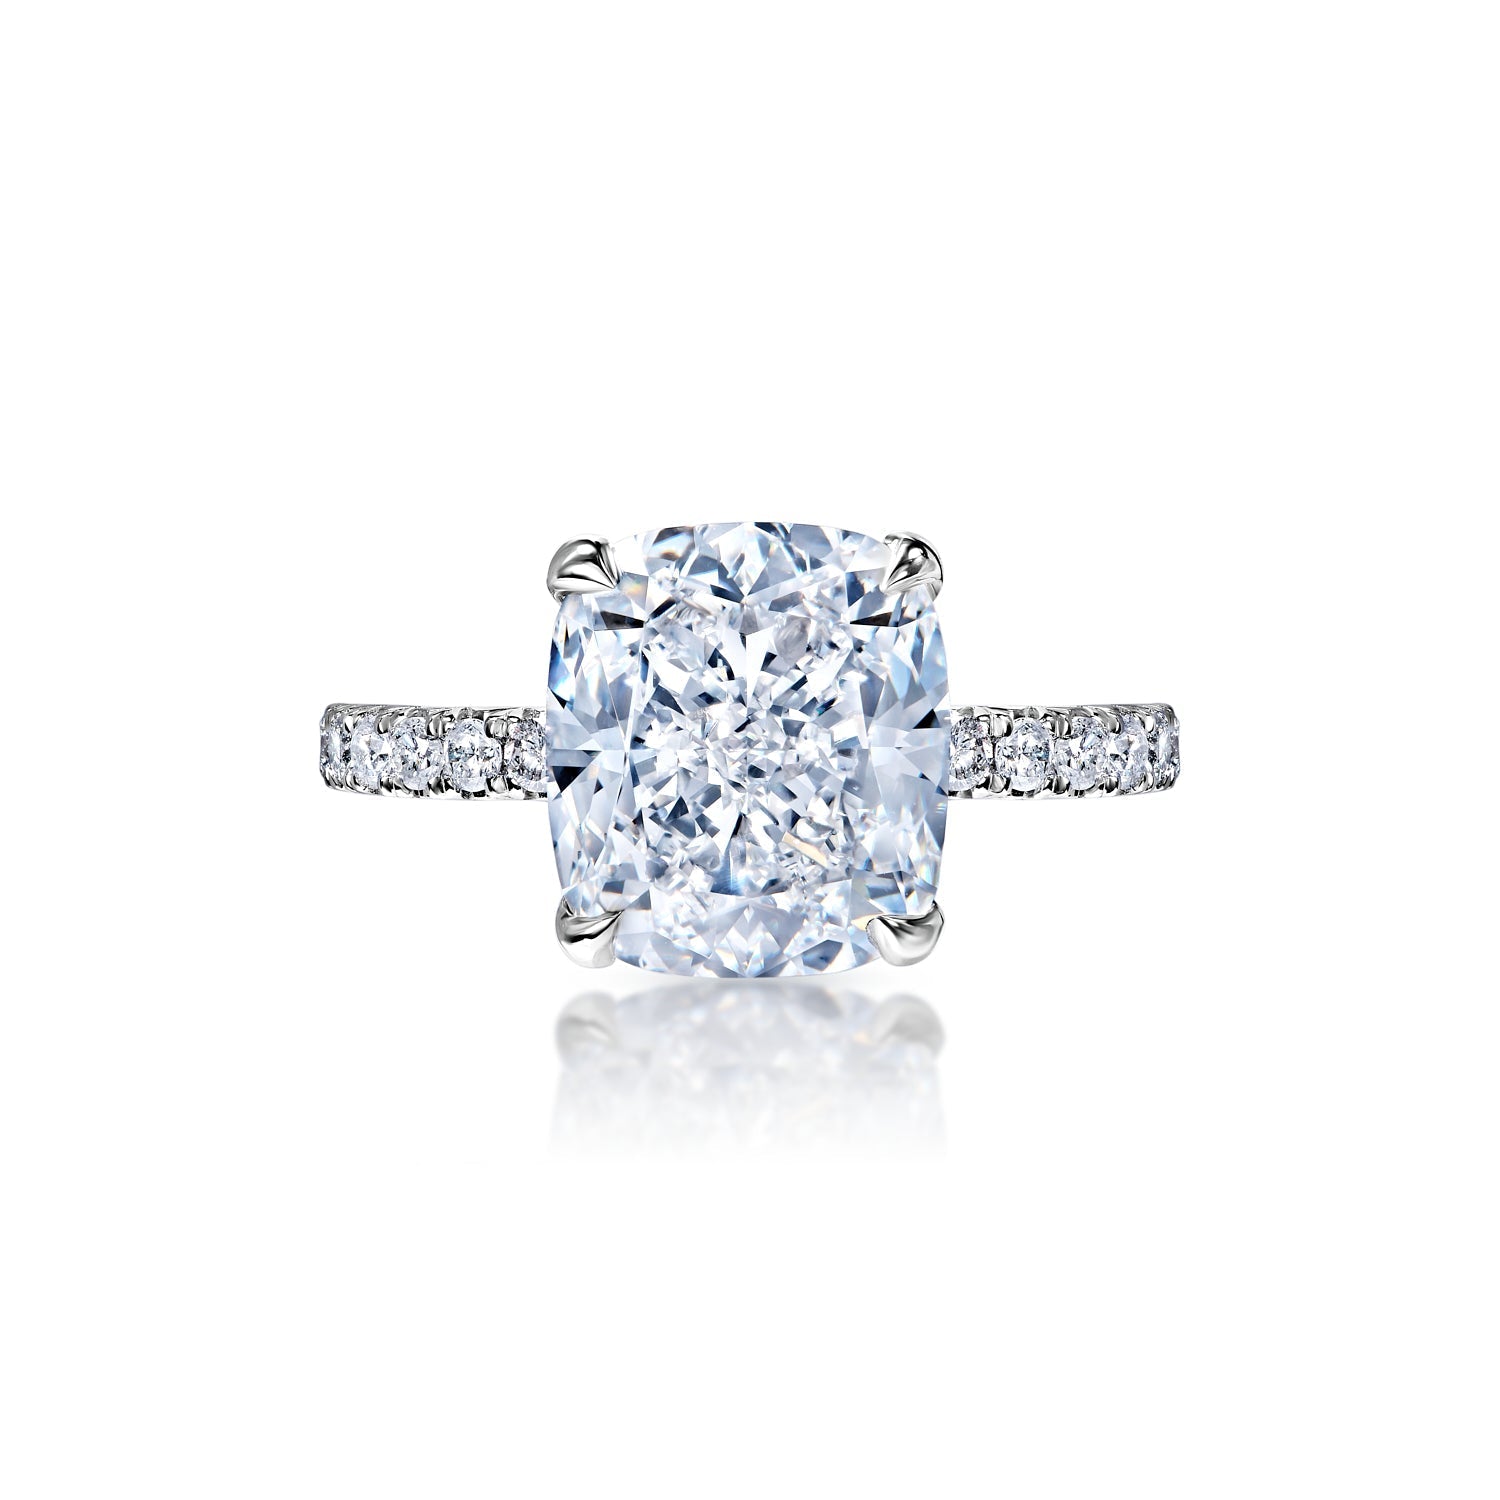 Dayana 6 Carat D VVS1 Cushion Cut Diamond Engagement Ring in Platinum Front View